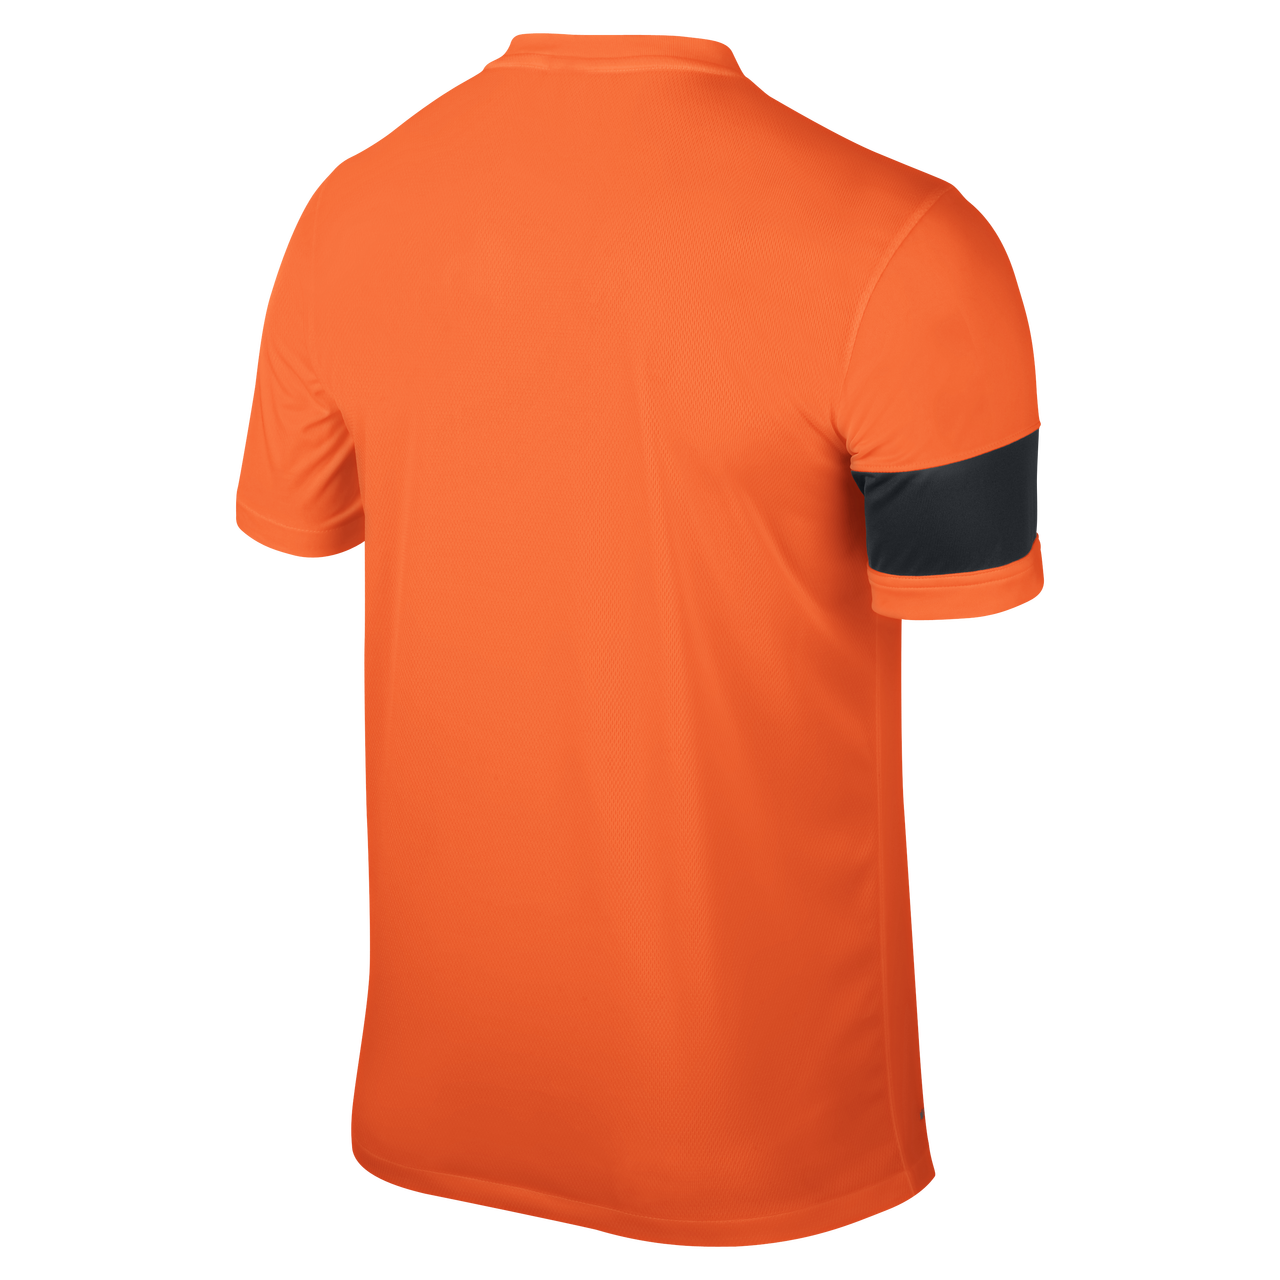 Nike Striker III Game Jersey- Short Sleeve